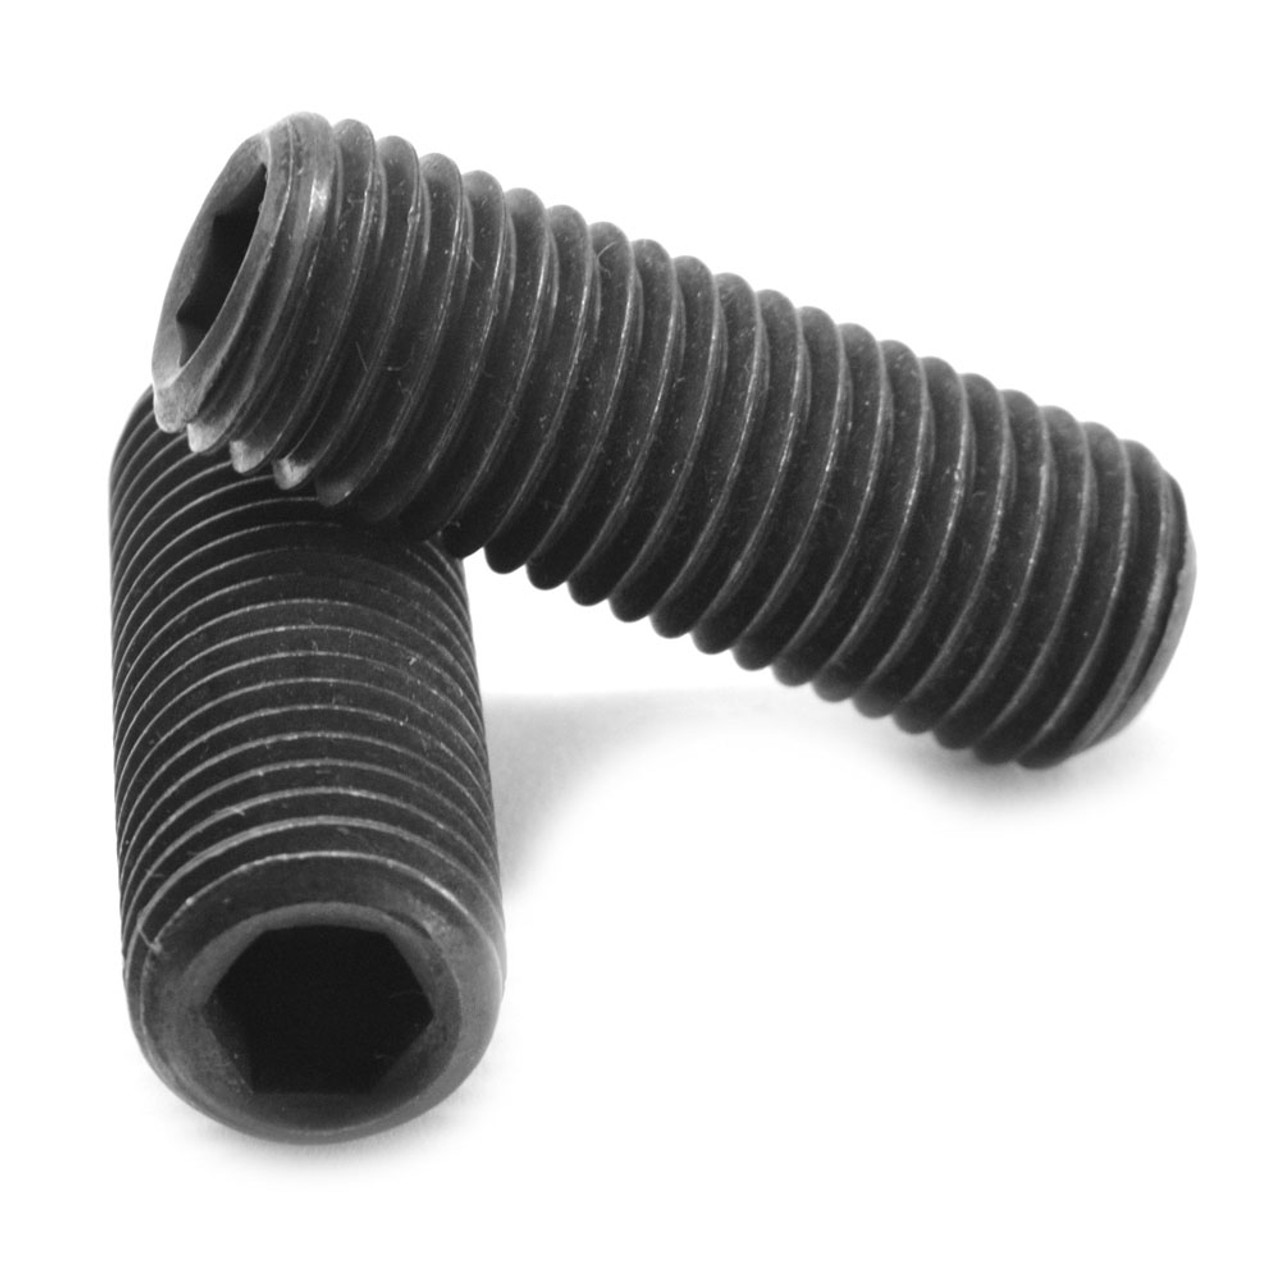 M3 x 0.50 x 25 MM Coarse Thread ISO 4029 / DIN 916 Class 45H Socket Set Screw Cup Point Alloy Steel Black Oxide